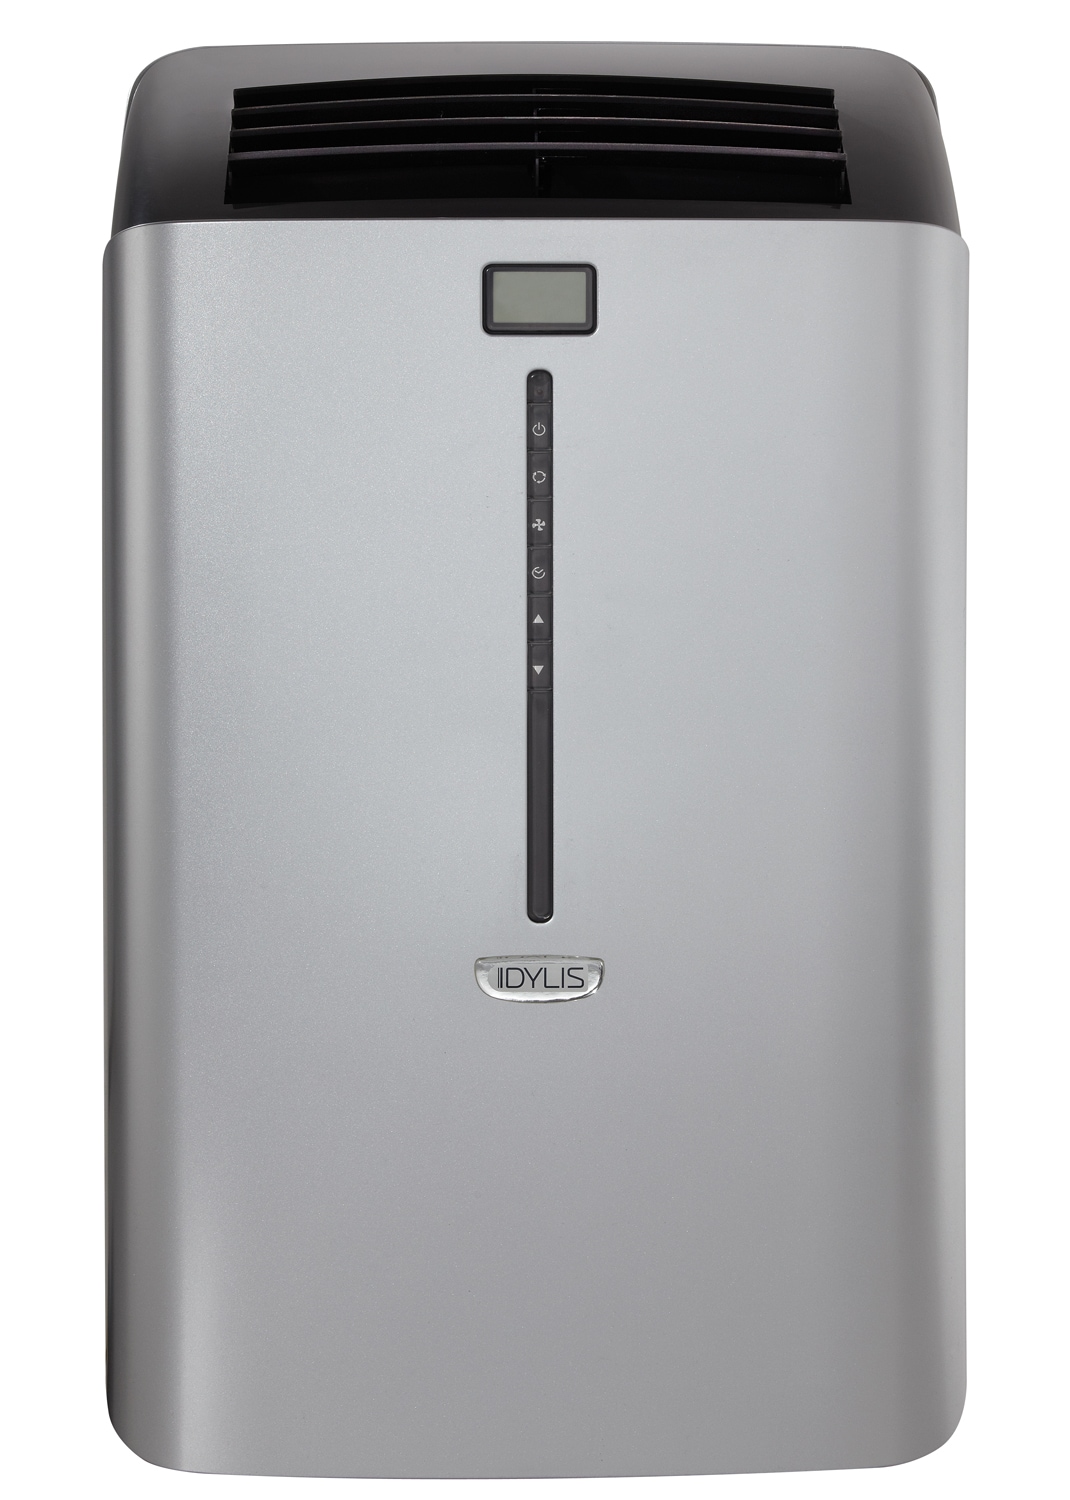 Idylis 12000 Btu Portable Room Air Conditioner In The Portable Air Conditioners Department At Lowes Com